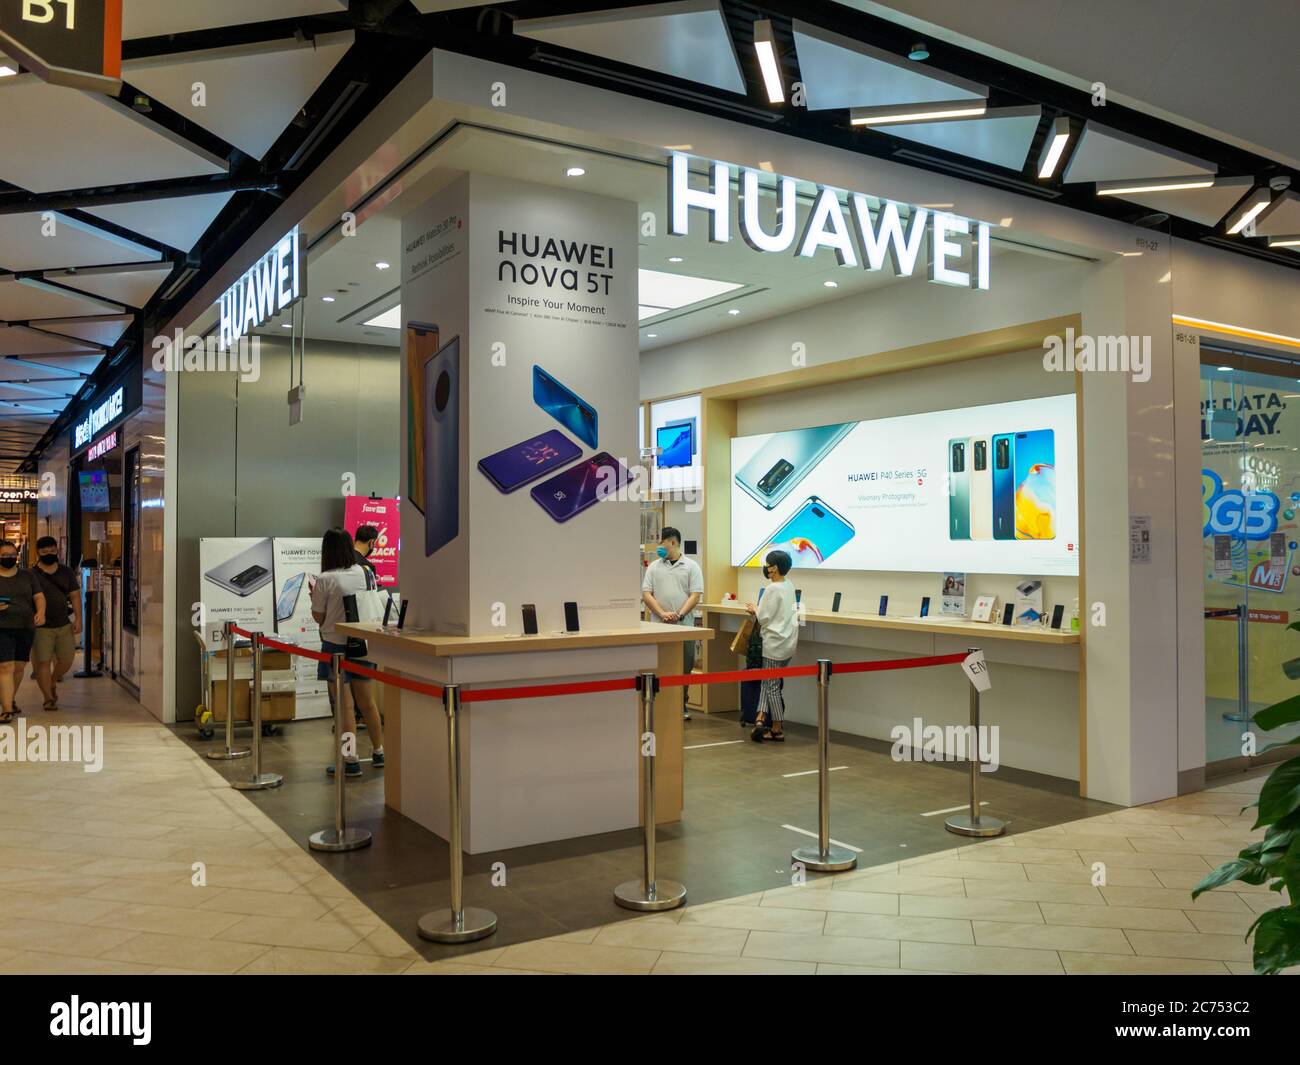 SINGAPORE – JUN 19, 2020 –Huawei smartphone shop with the Huawei logo clearly visible in Paya Lebar Quarter shopping mall, downtown Singapore Stock Photo